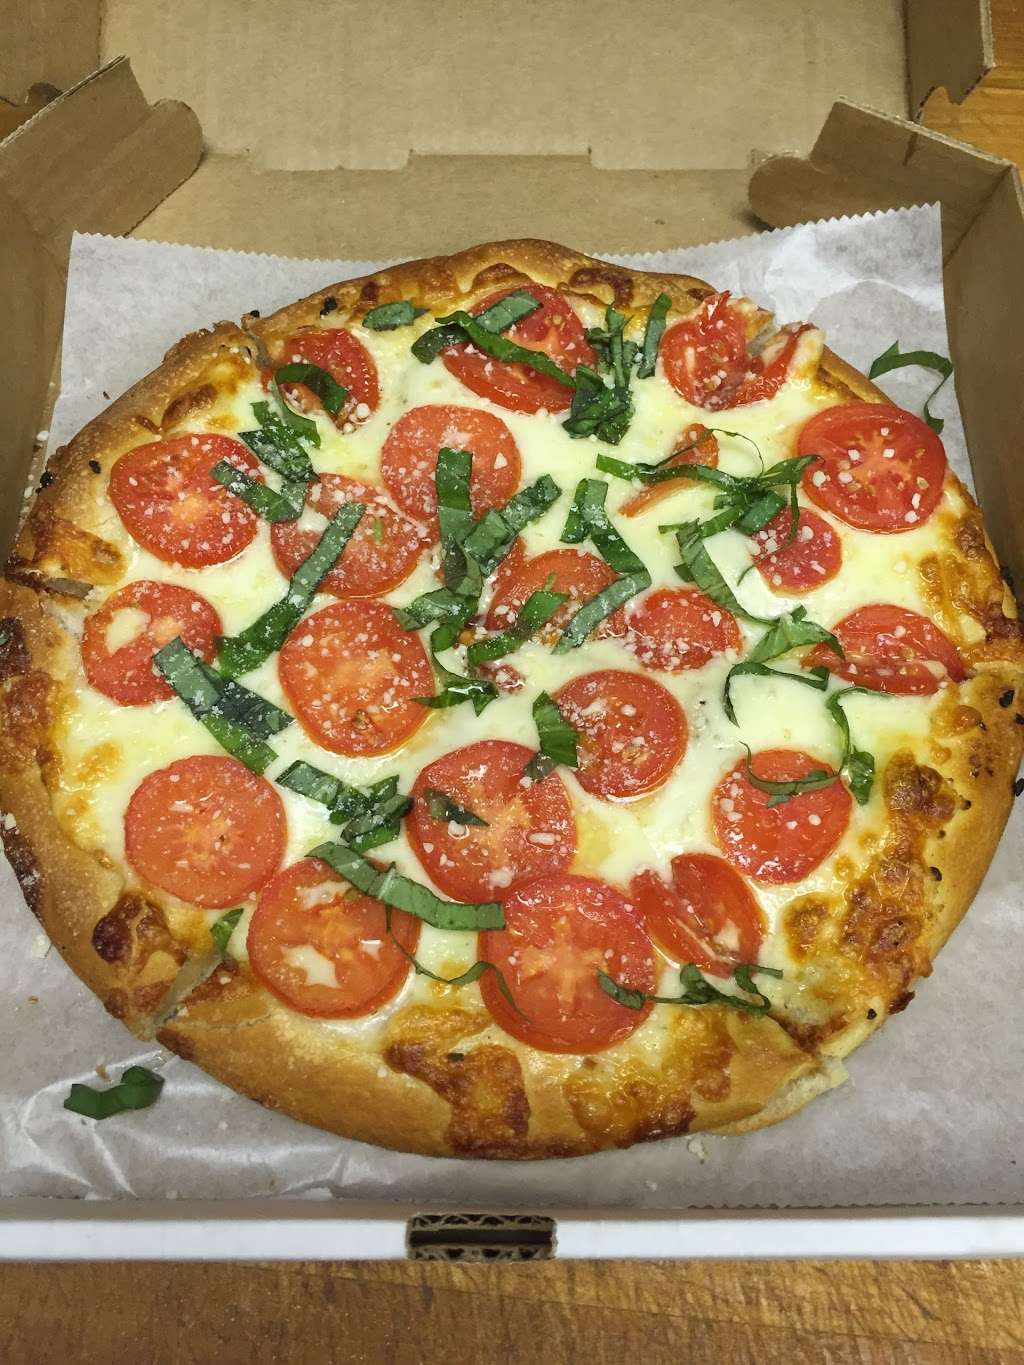 Capital Pizza | 1219, 615 White Horse Pike, Haddon Township, NJ 08107, USA | Phone: (856) 858-7800